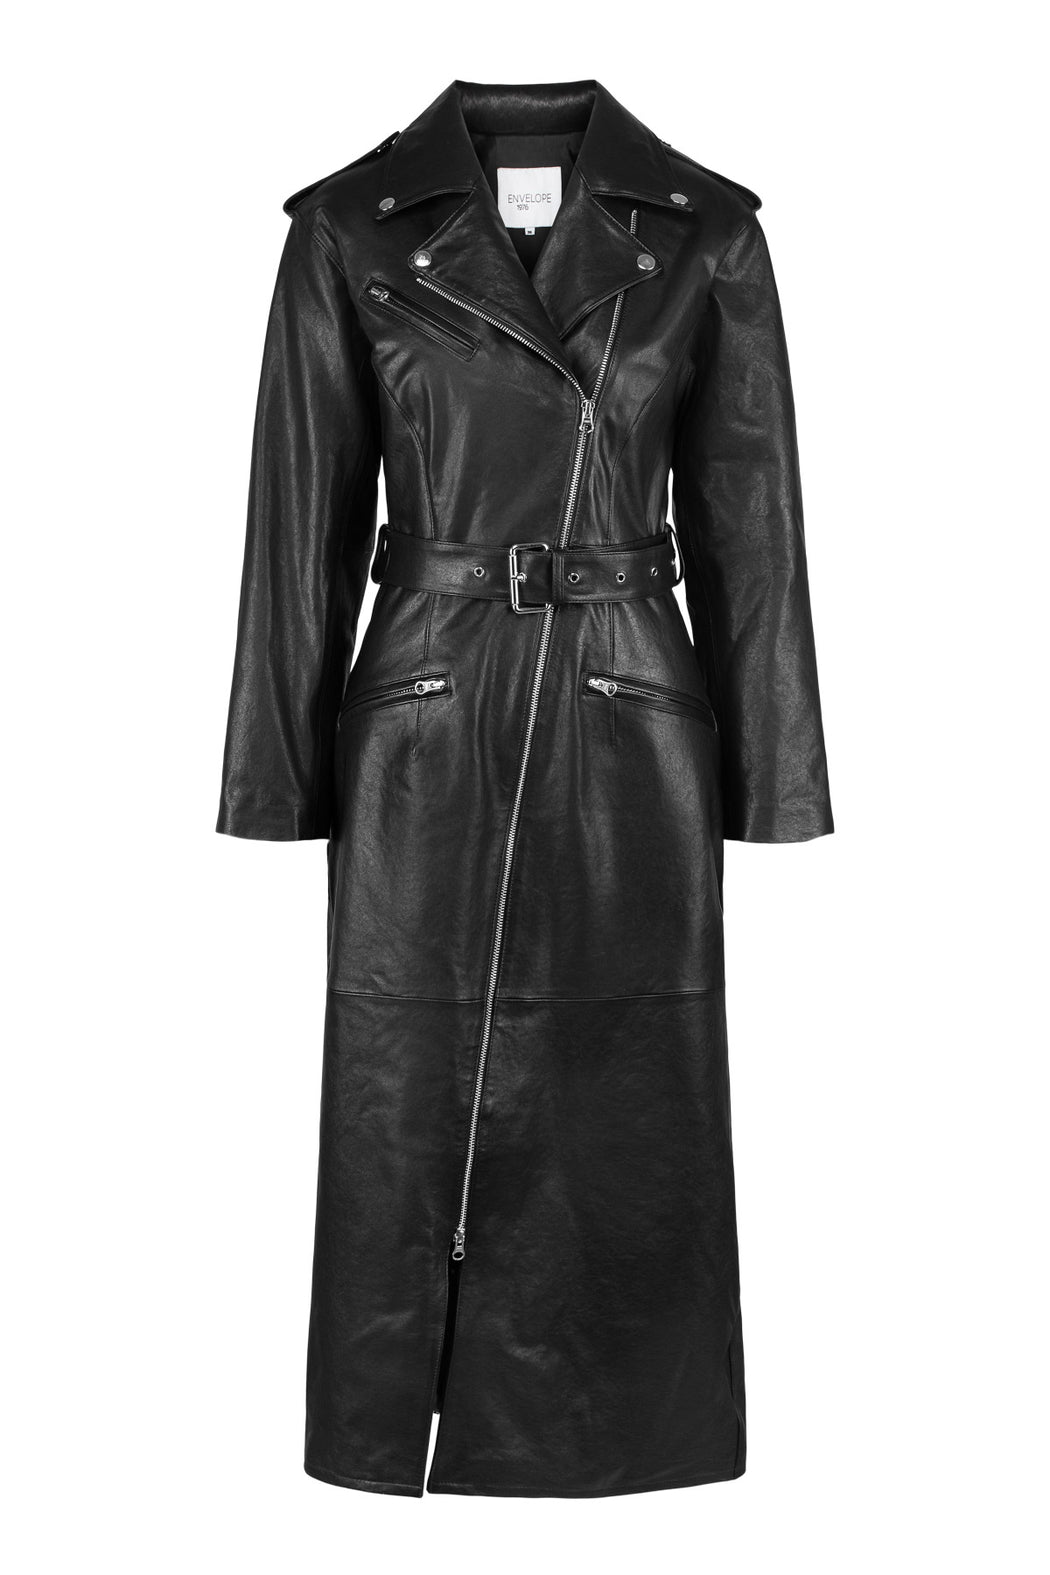 Envelope1976 Jax dress long - Leather Dress Black